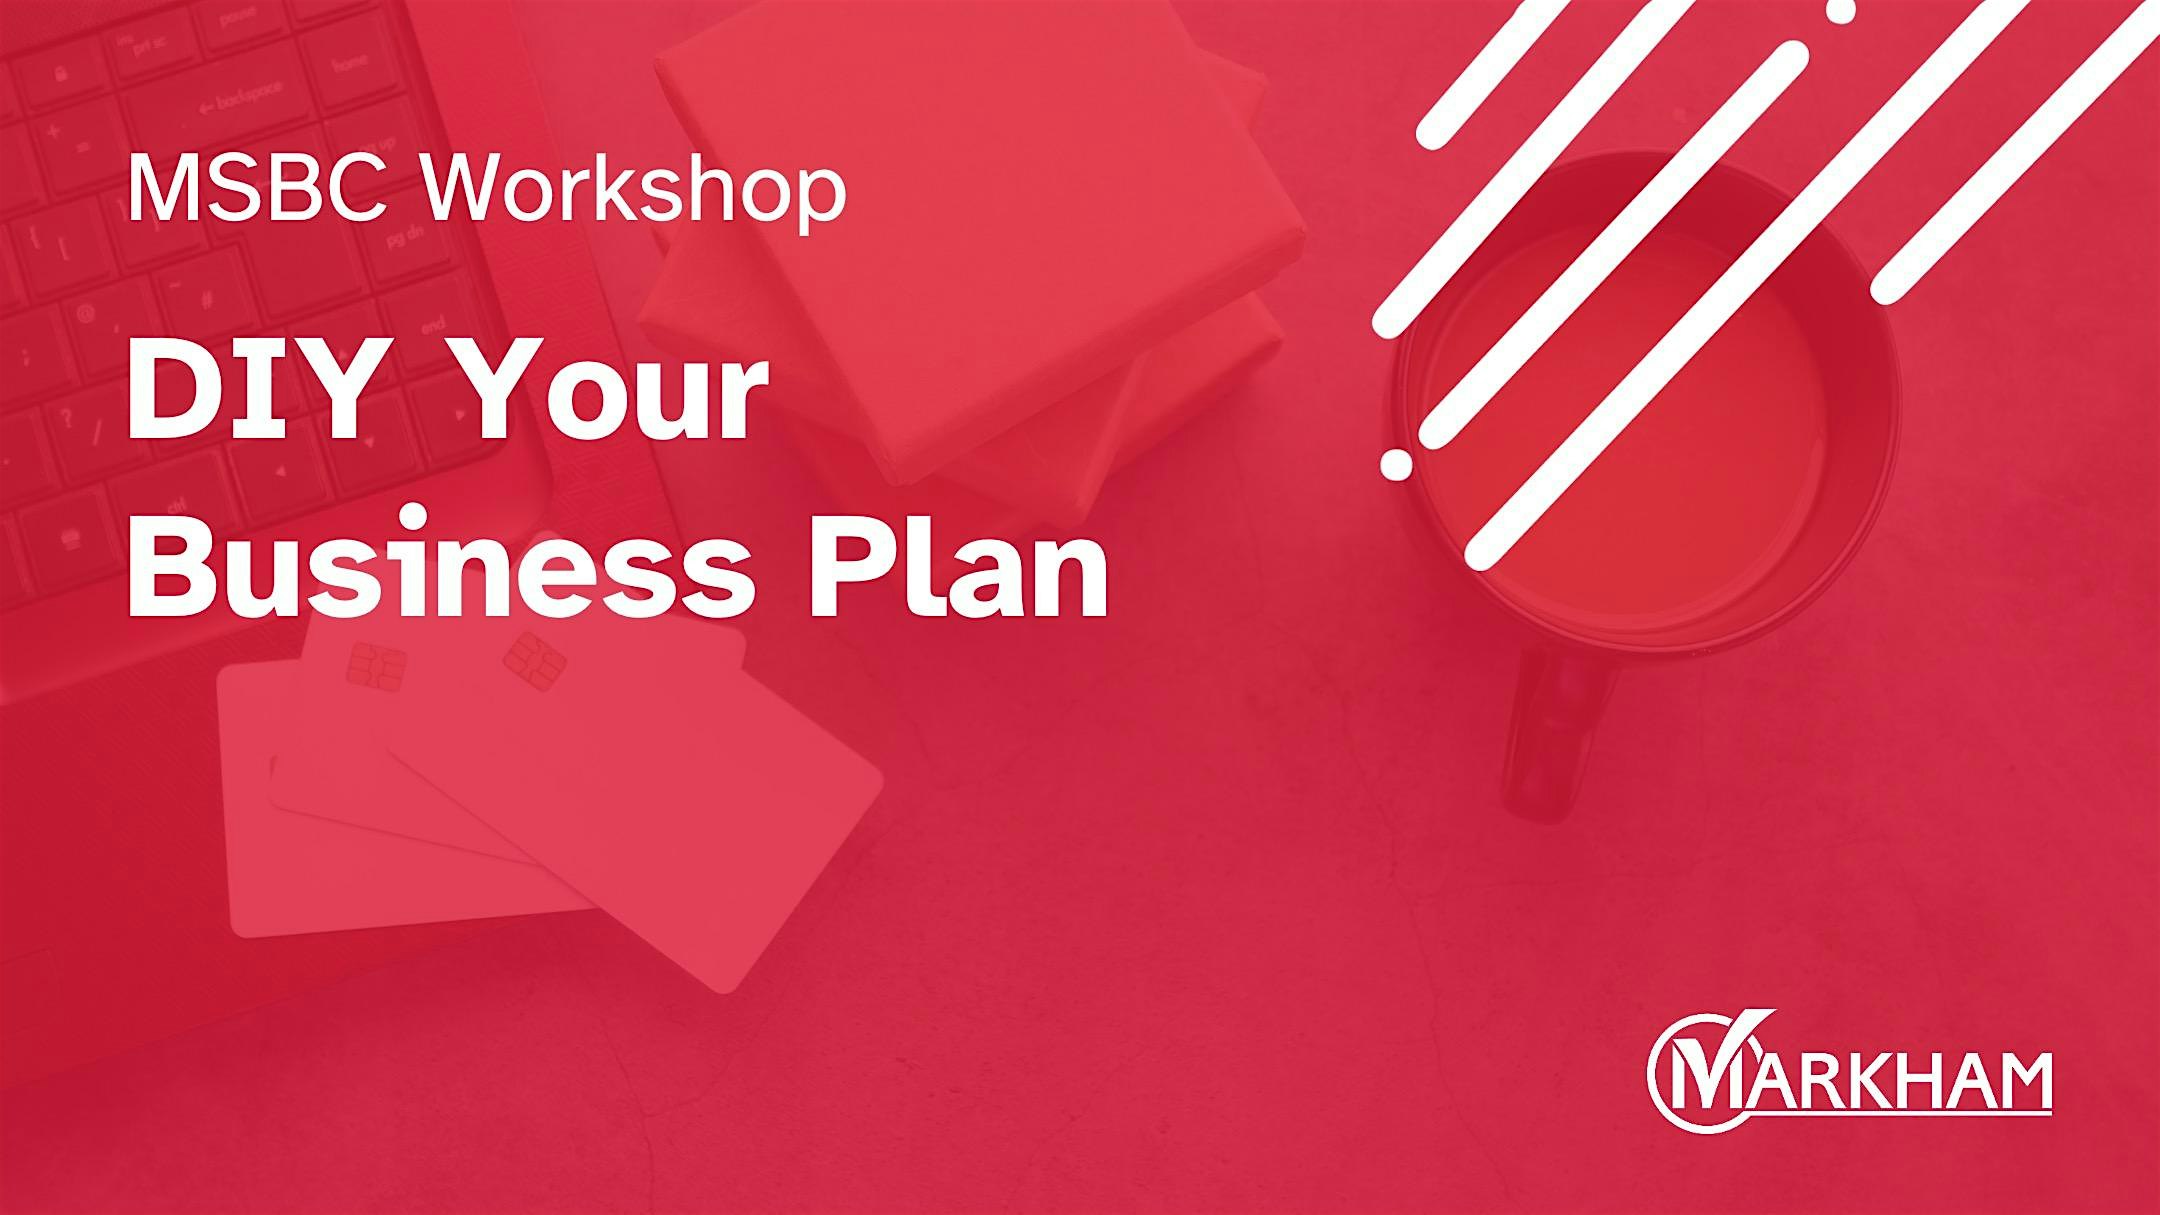 DIY Your Business Plan